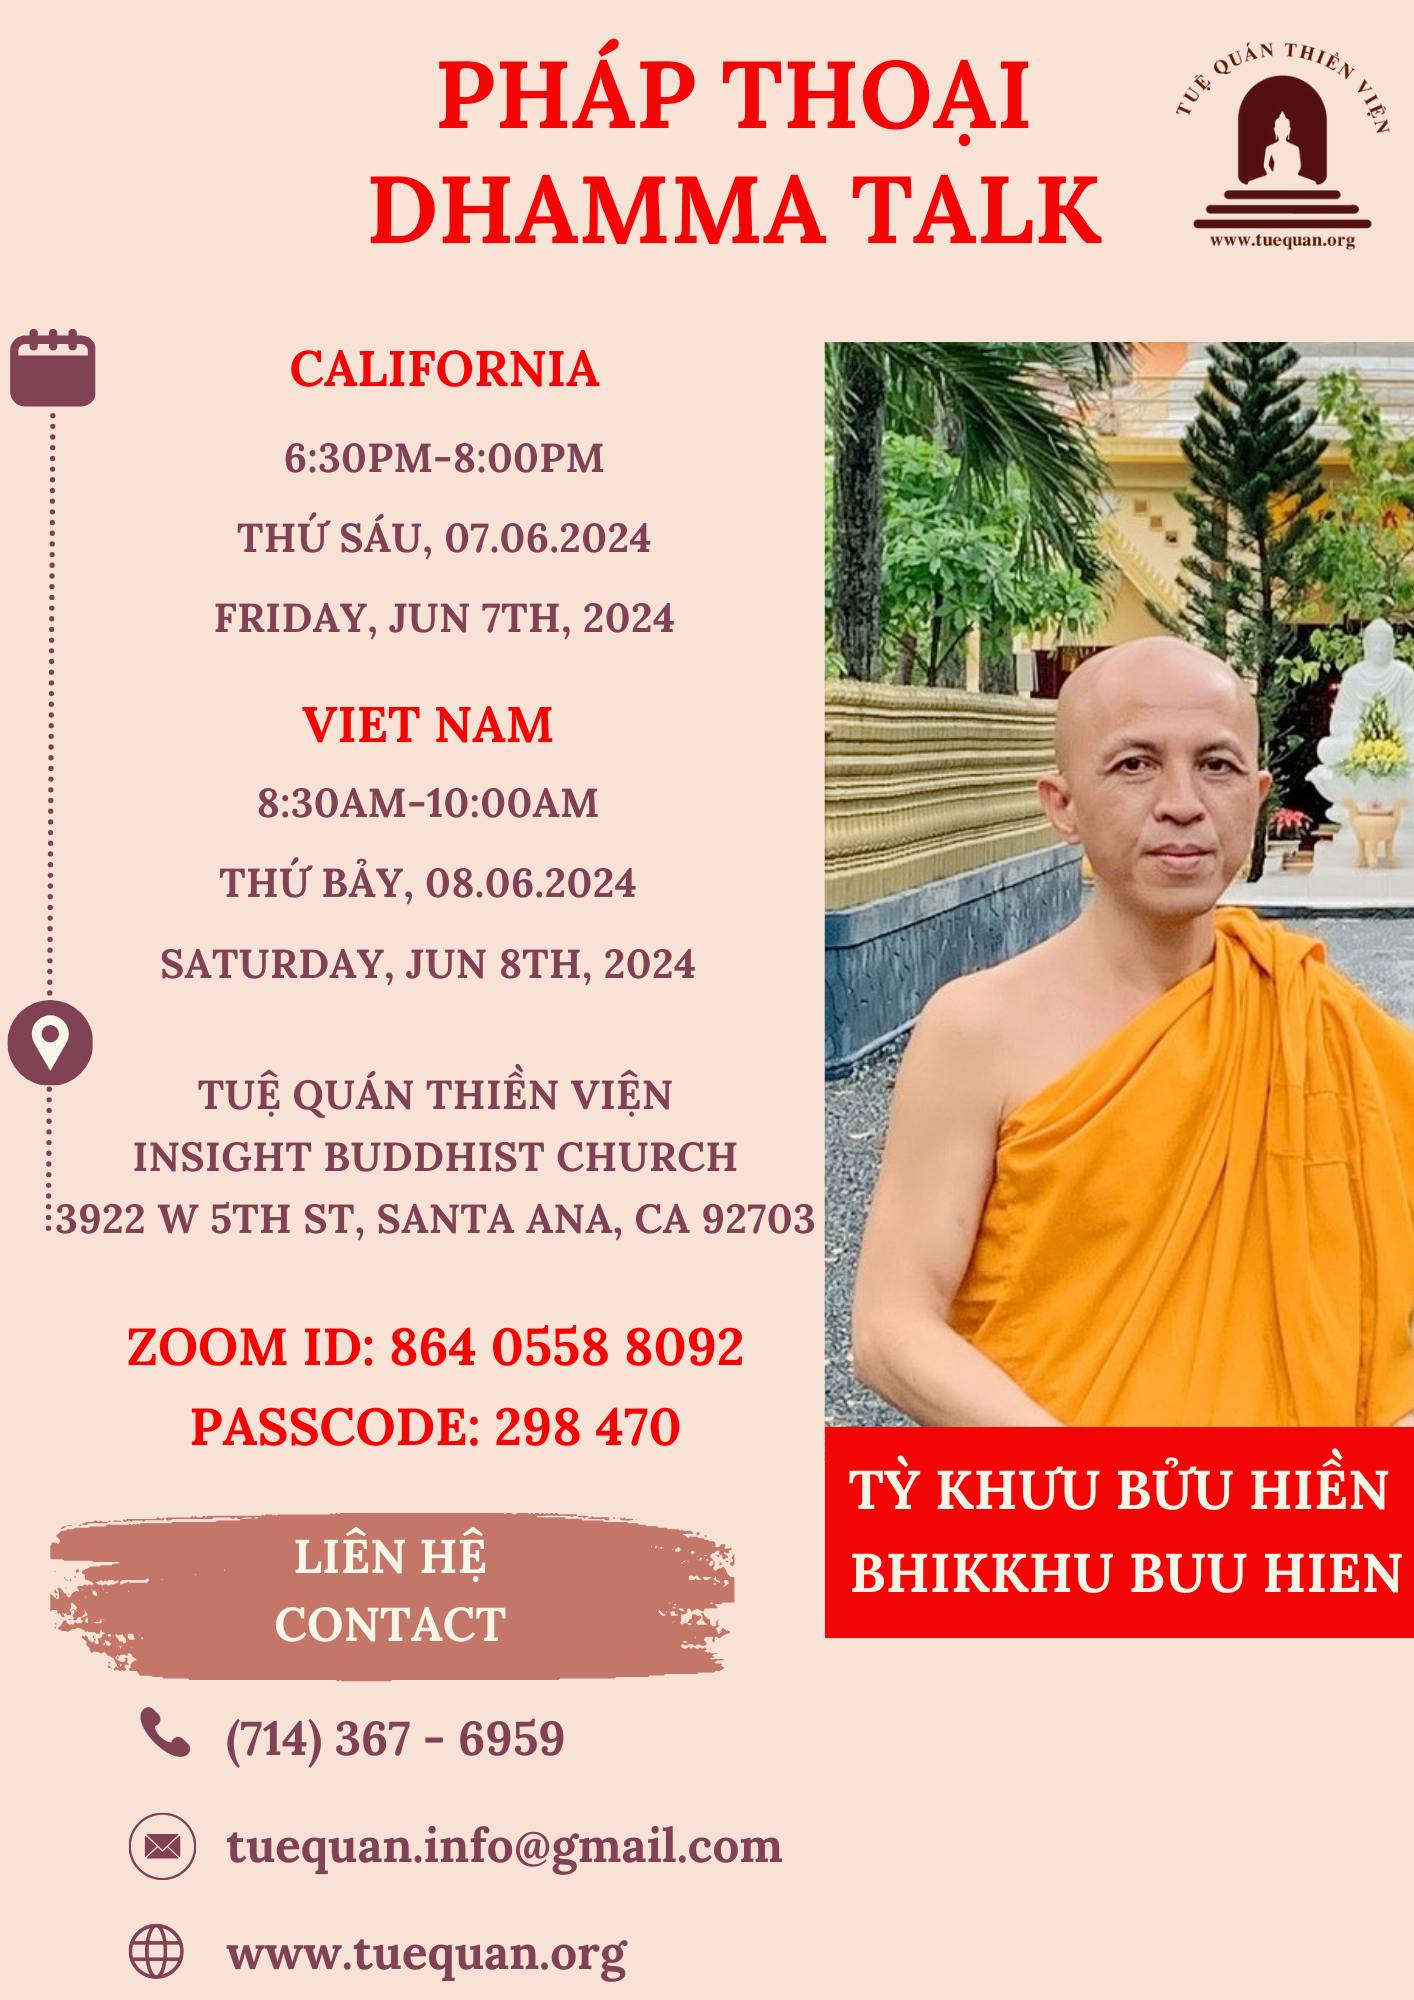 Friday Dhamma Talk, Jun 7th 2024